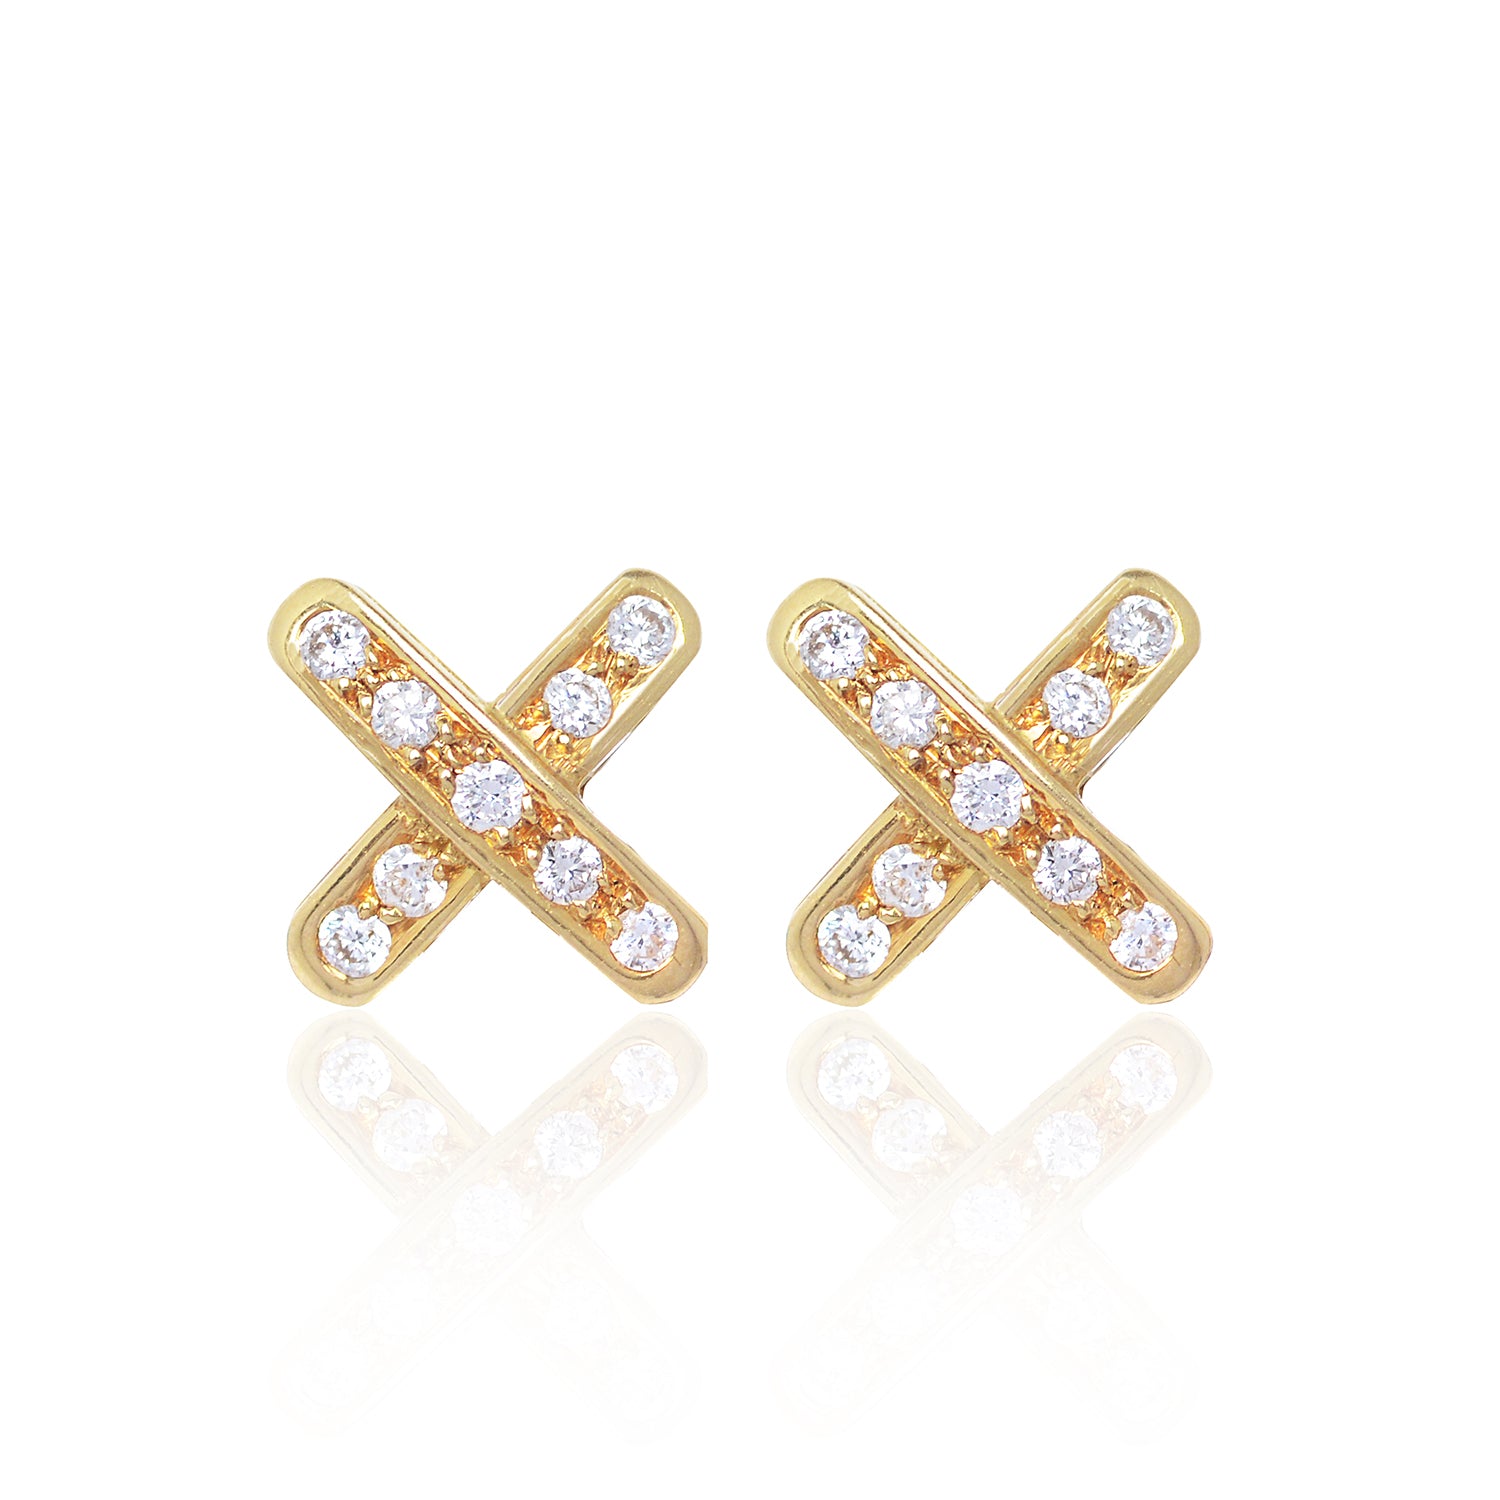 Cross Diamond Earrings set in 18ct yellow gold with 18 x 2 pointer diamonds by McFarlane Fine Jewellery